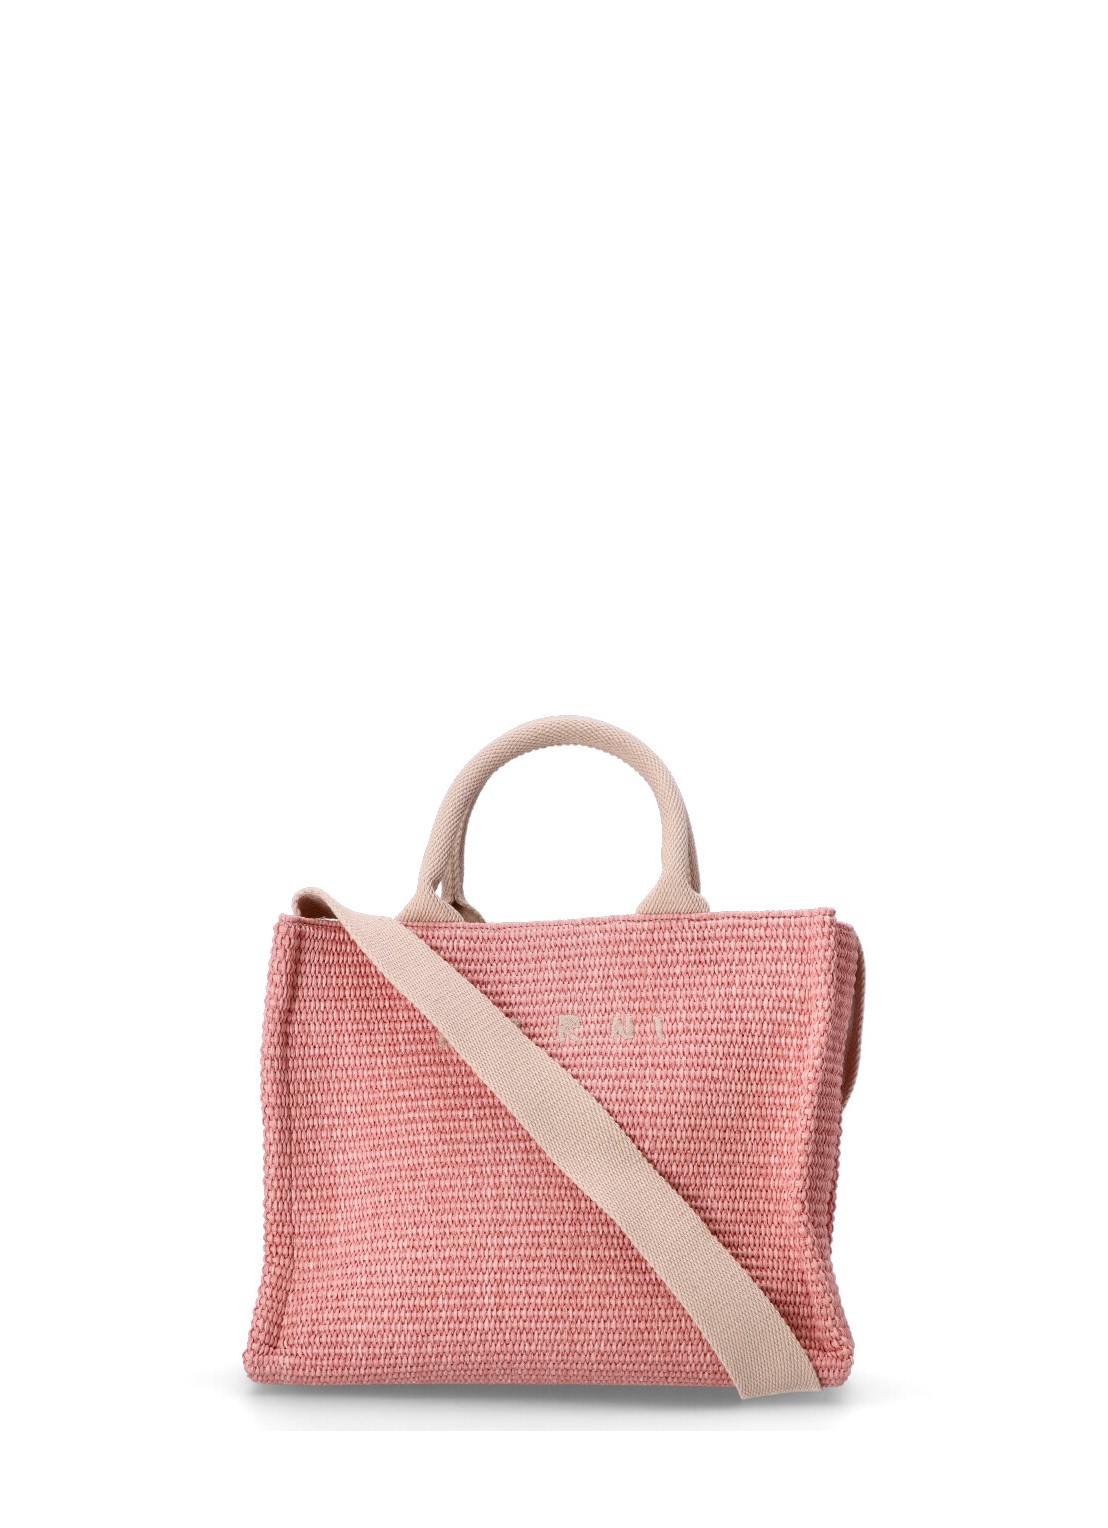 Handbag marni handbag woman small basket shmp0077u0 00c09 talla rosa
 